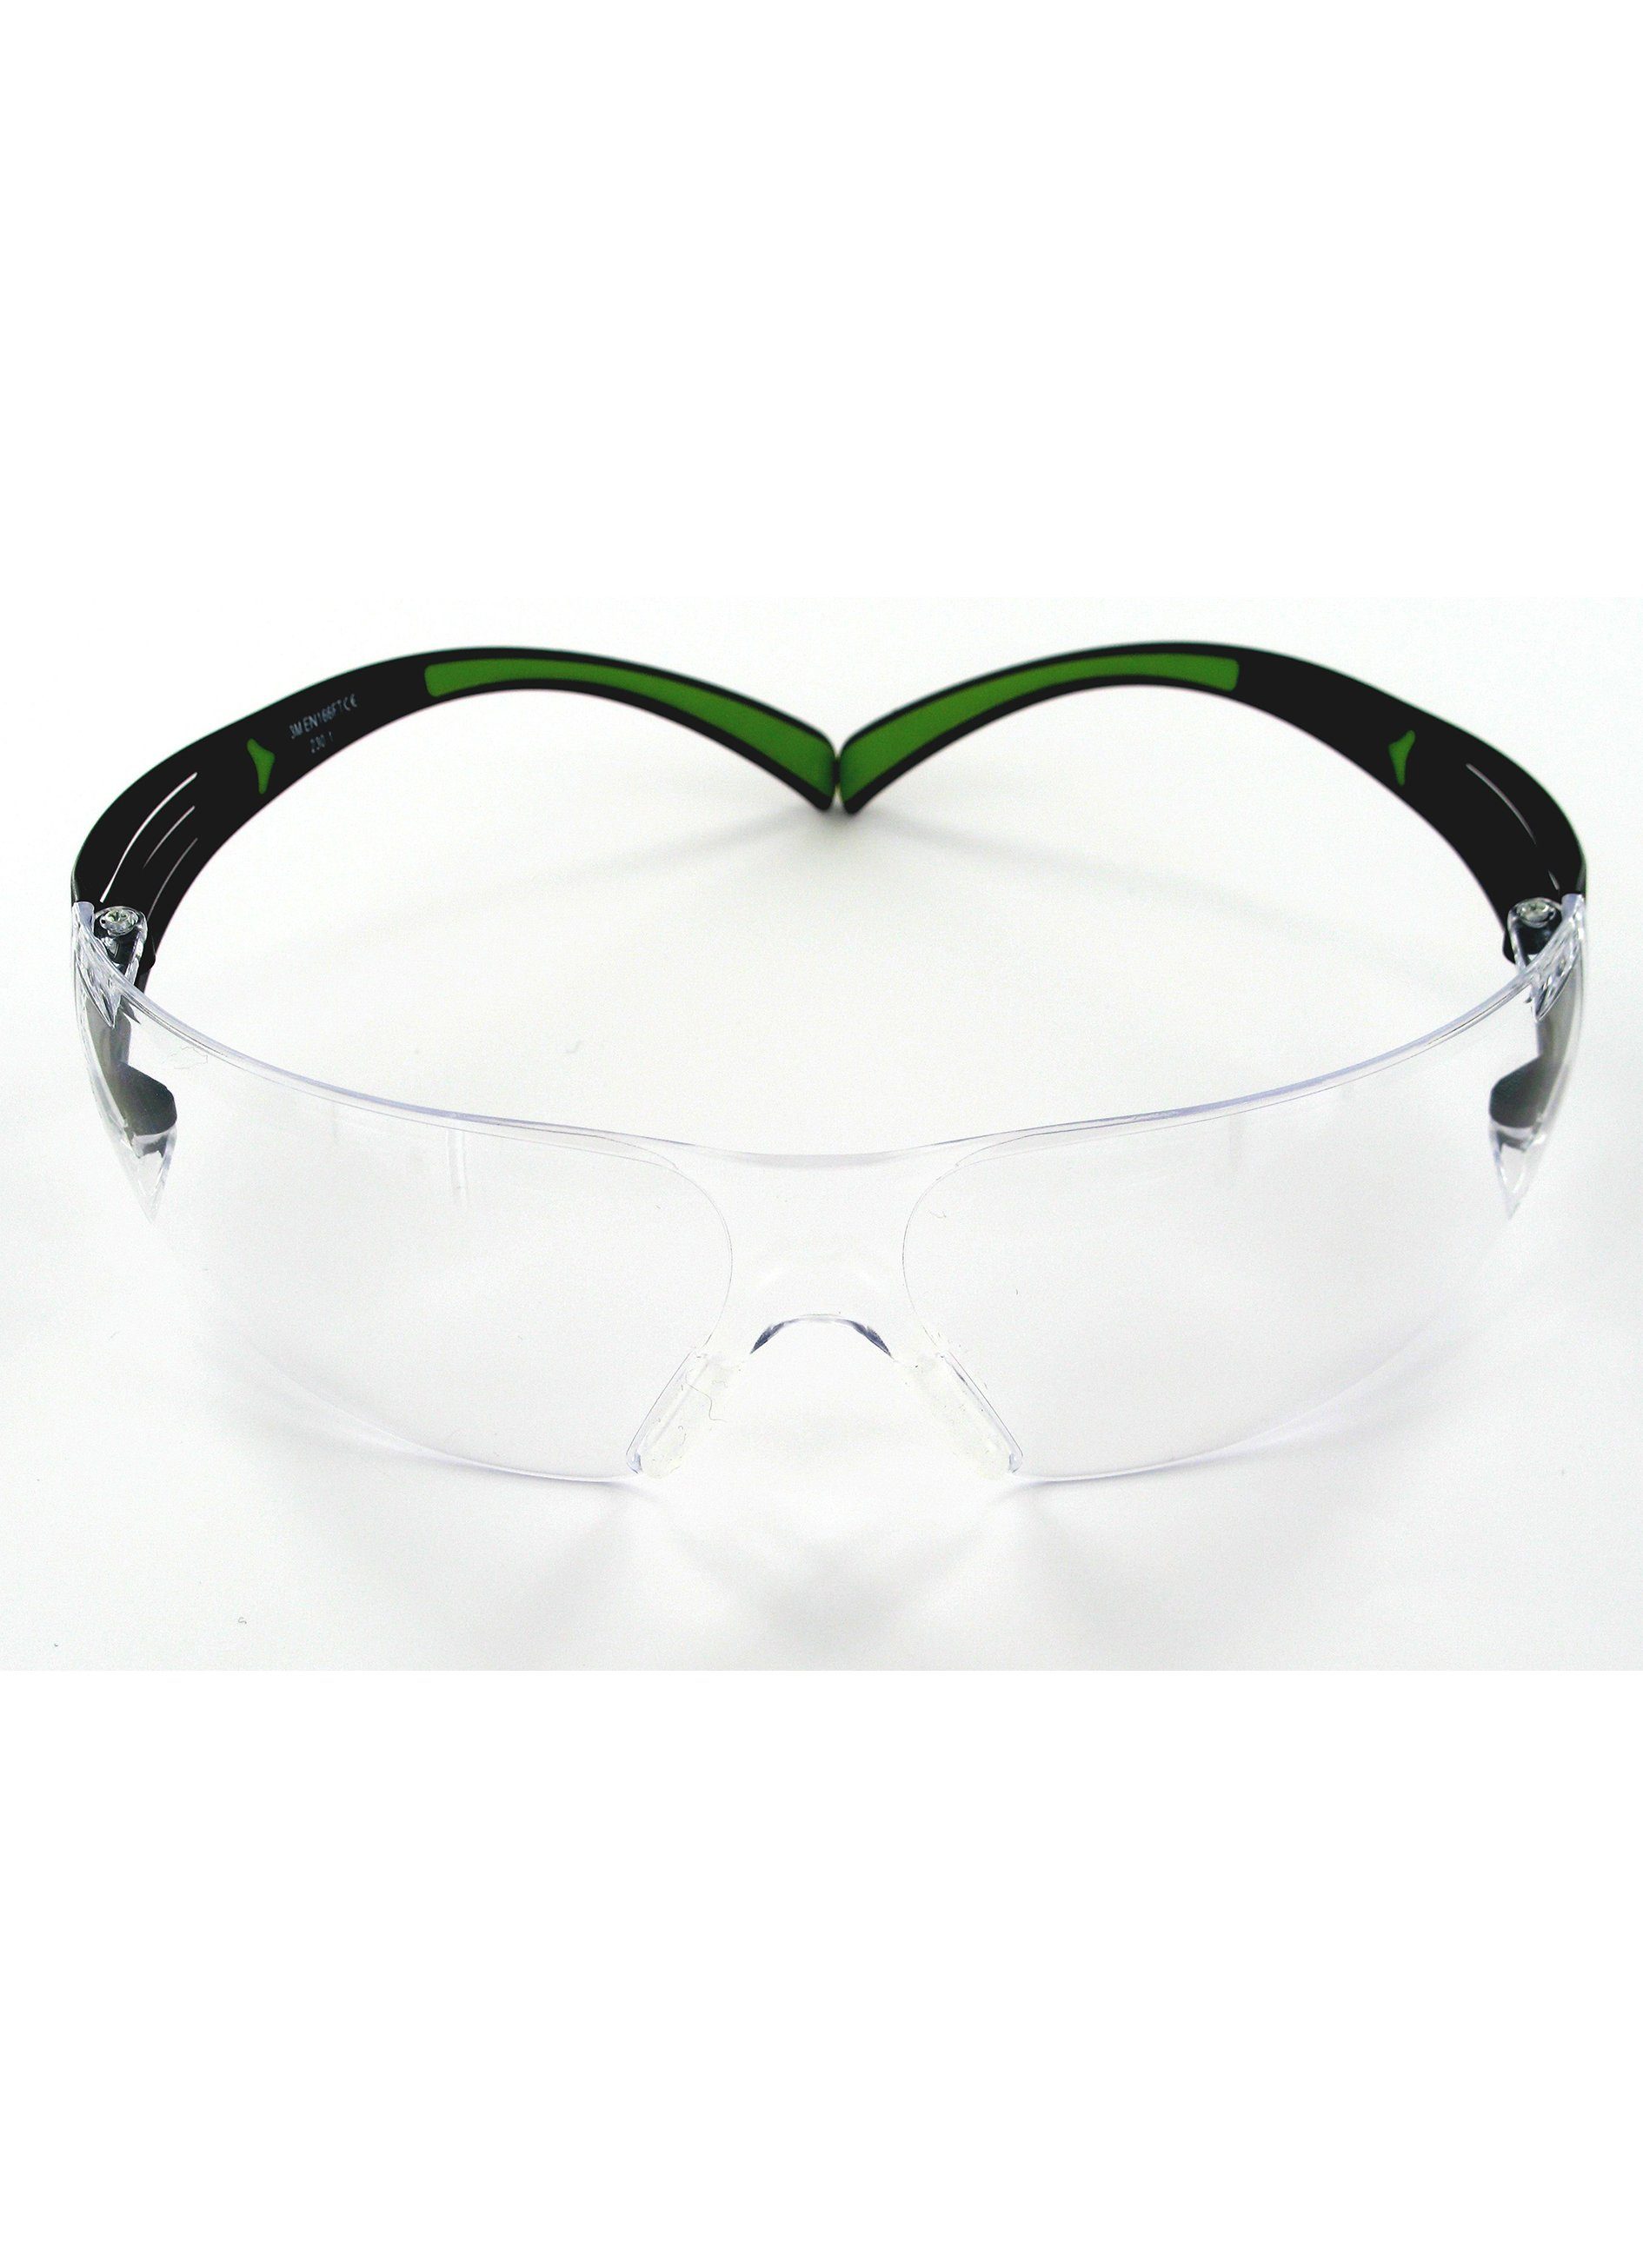 Brille SF401AF, Anti-Scratch-Beschichtung 3M klar, Schutzbrille 3M Anti-Fog- SecureFit &